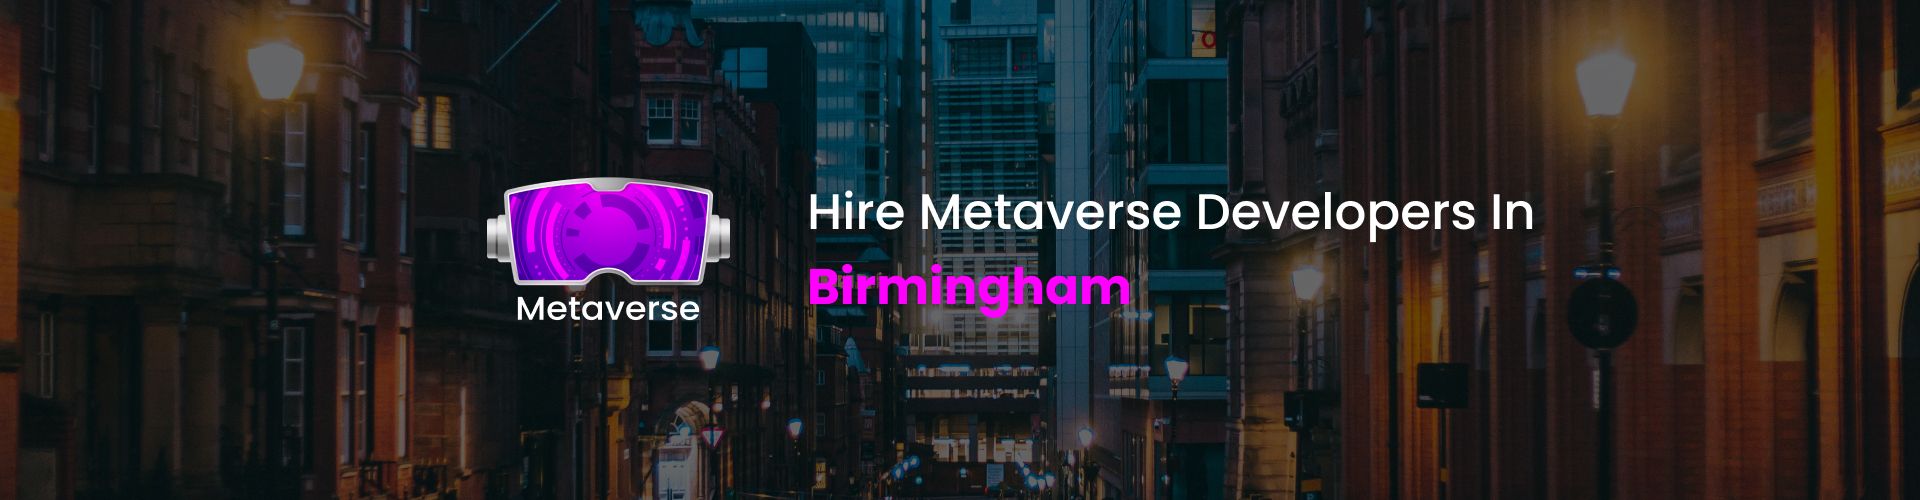 hire metaverse developers in birmingham